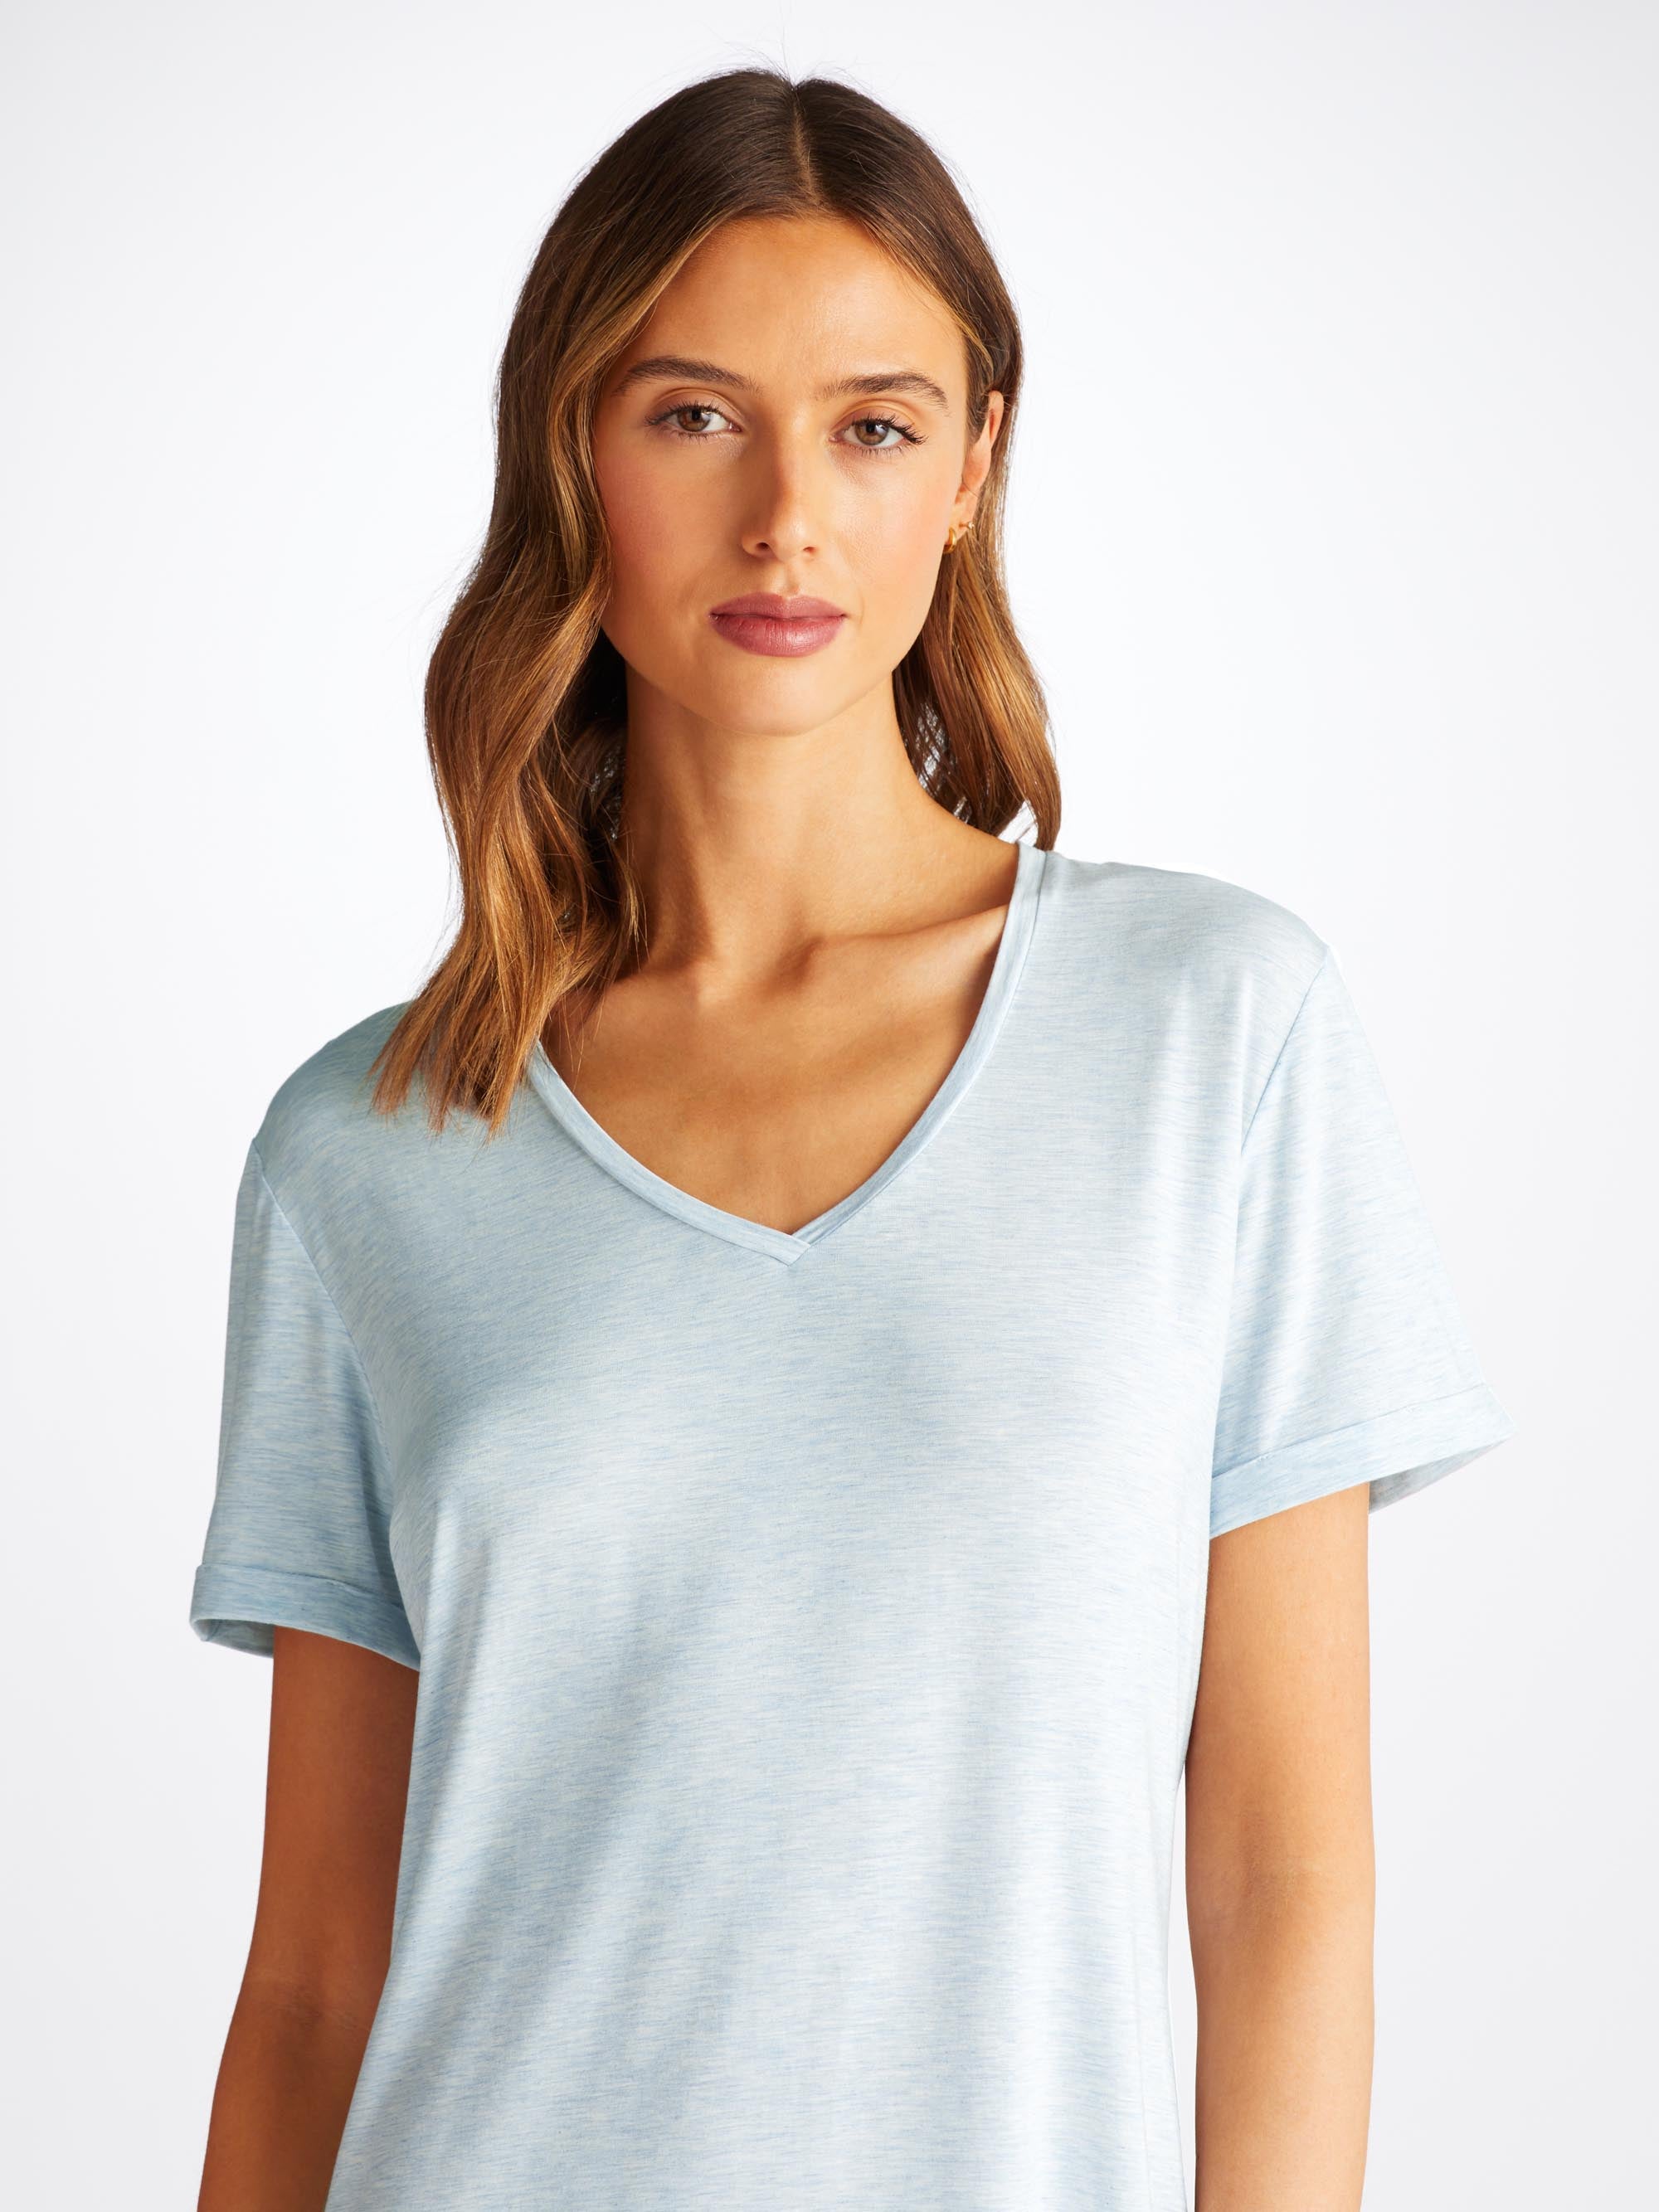 Women's V-Neck Sleep T-Shirt Ethan Micro Modal Stretch Light Blue Heather